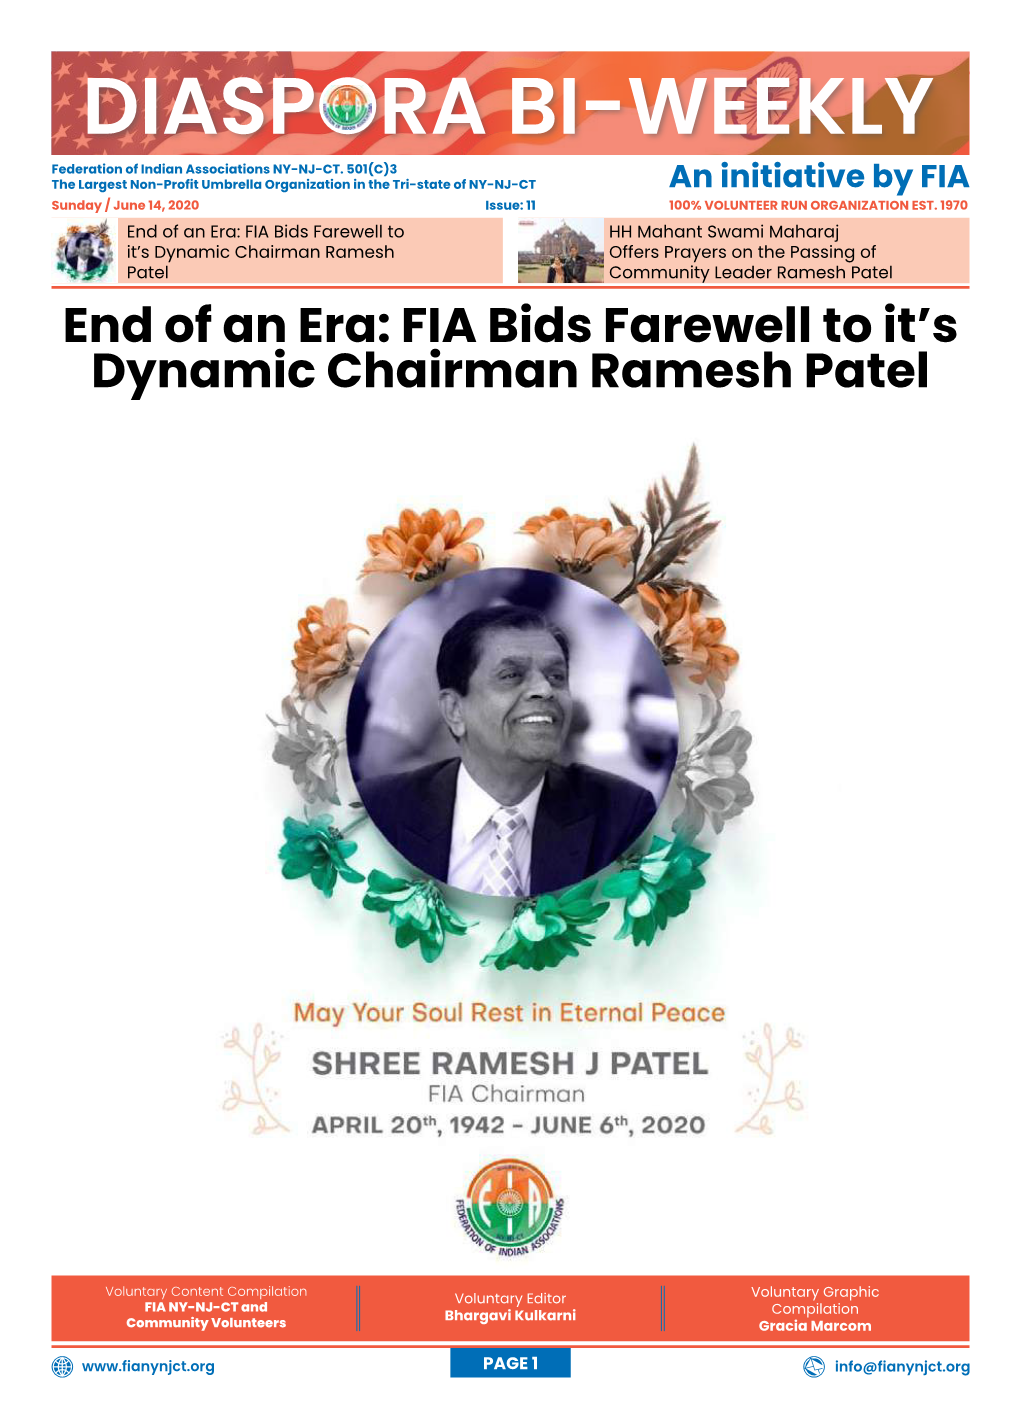 FIA Bids Farewell to It's Dynamic Chairman Ramesh Patel